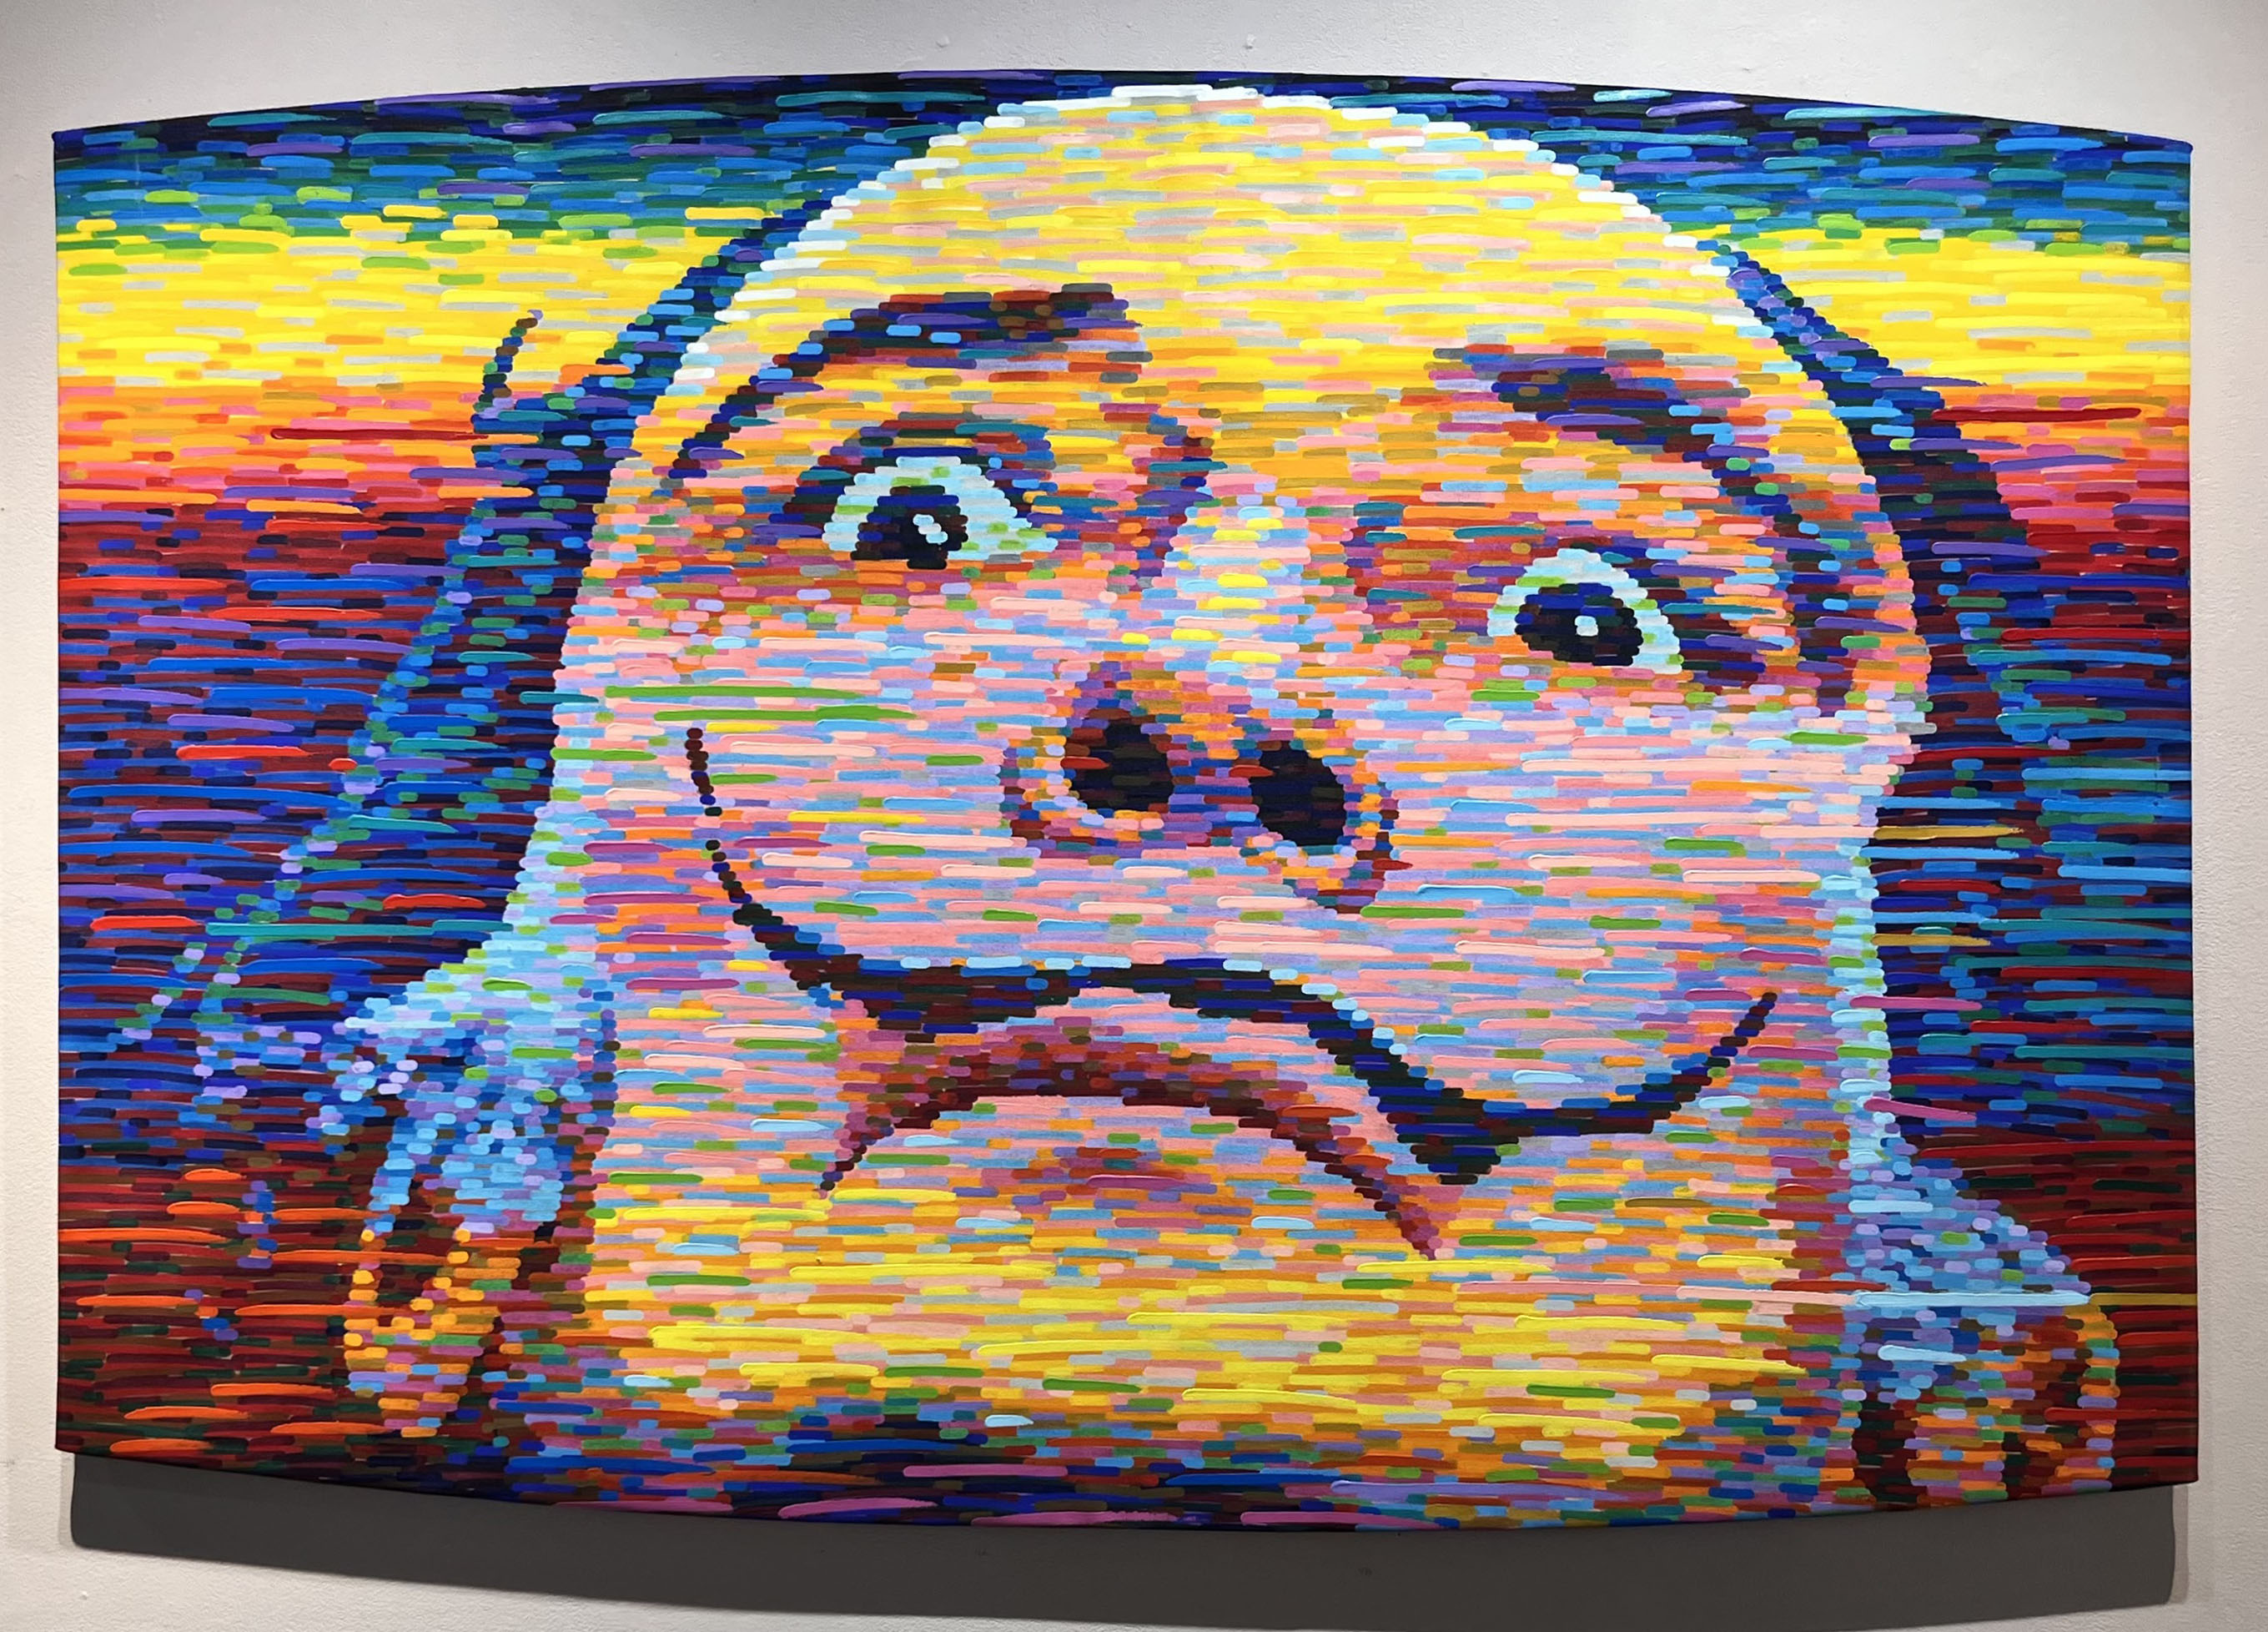 SALVADOR DALI, acrylic on canvas, 44 x 65 inches